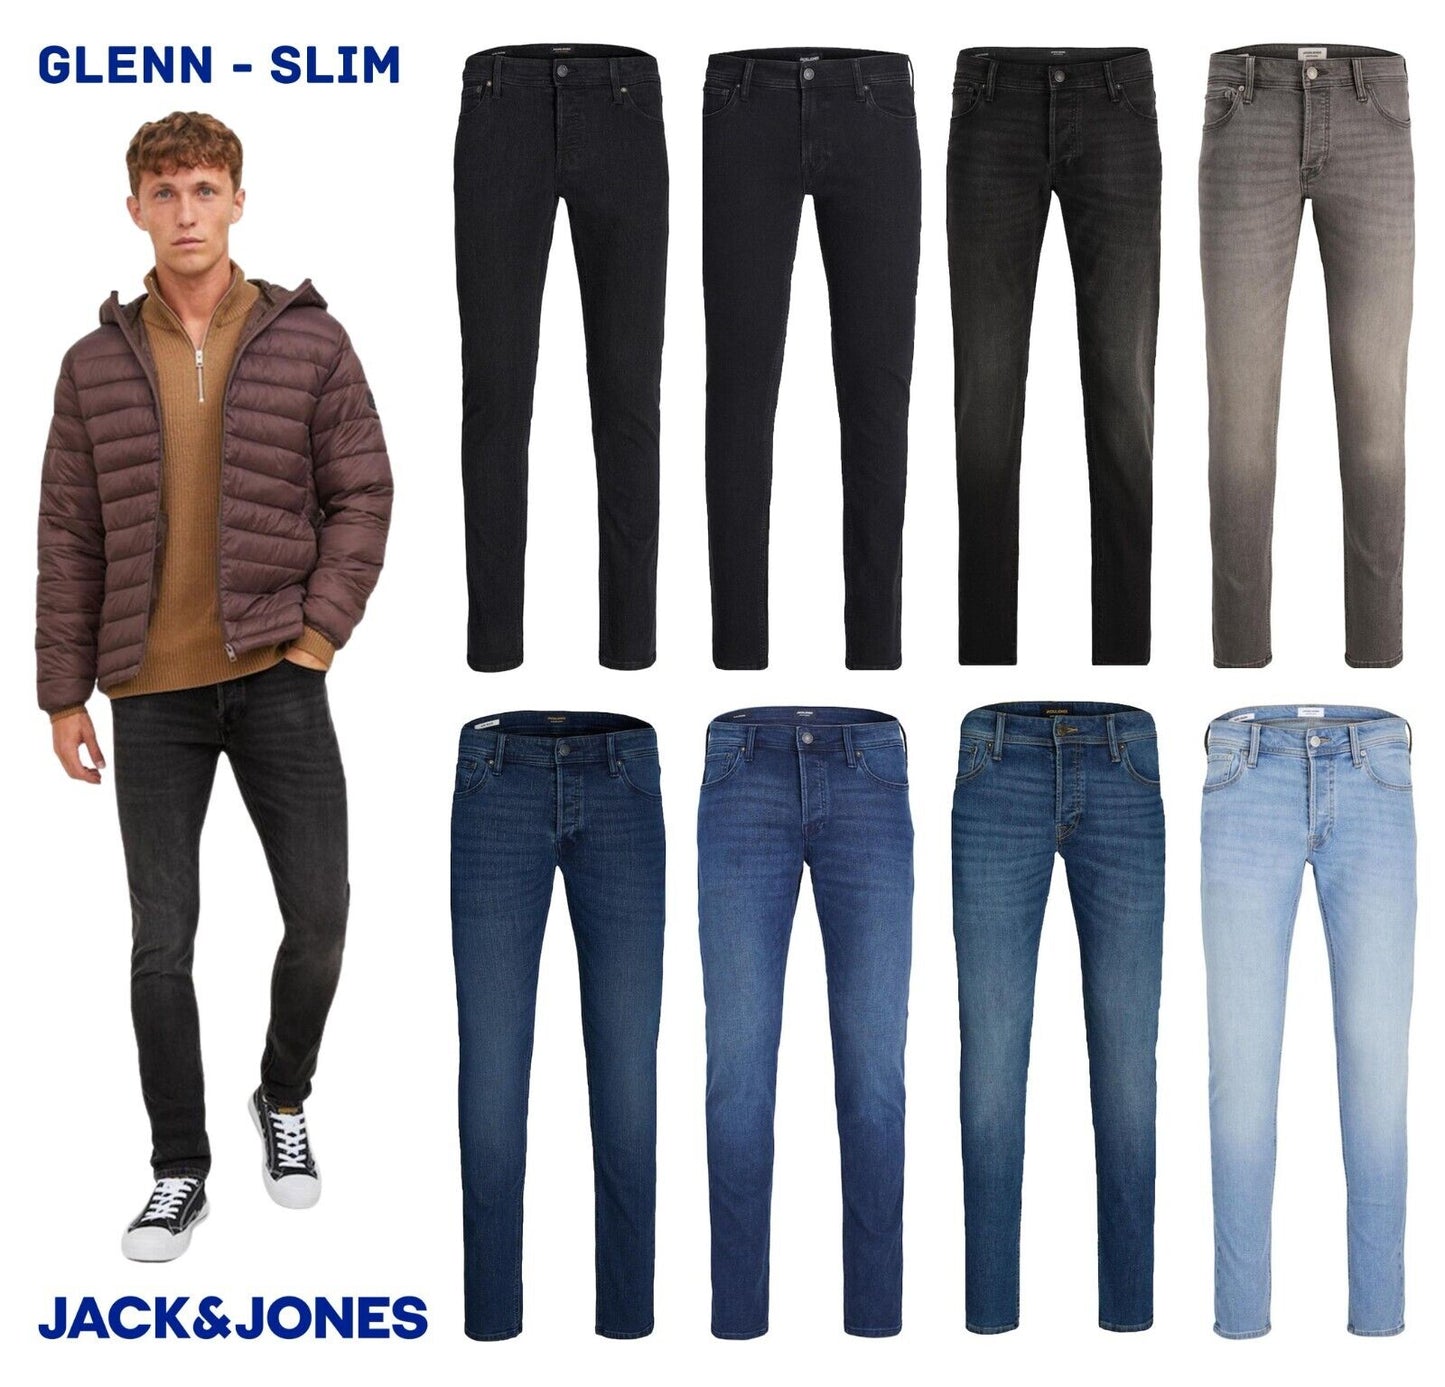 Mens Slim Fit Jeans Jack & Jones Glenn Denim Stretch Pants Smart Casual Trousers